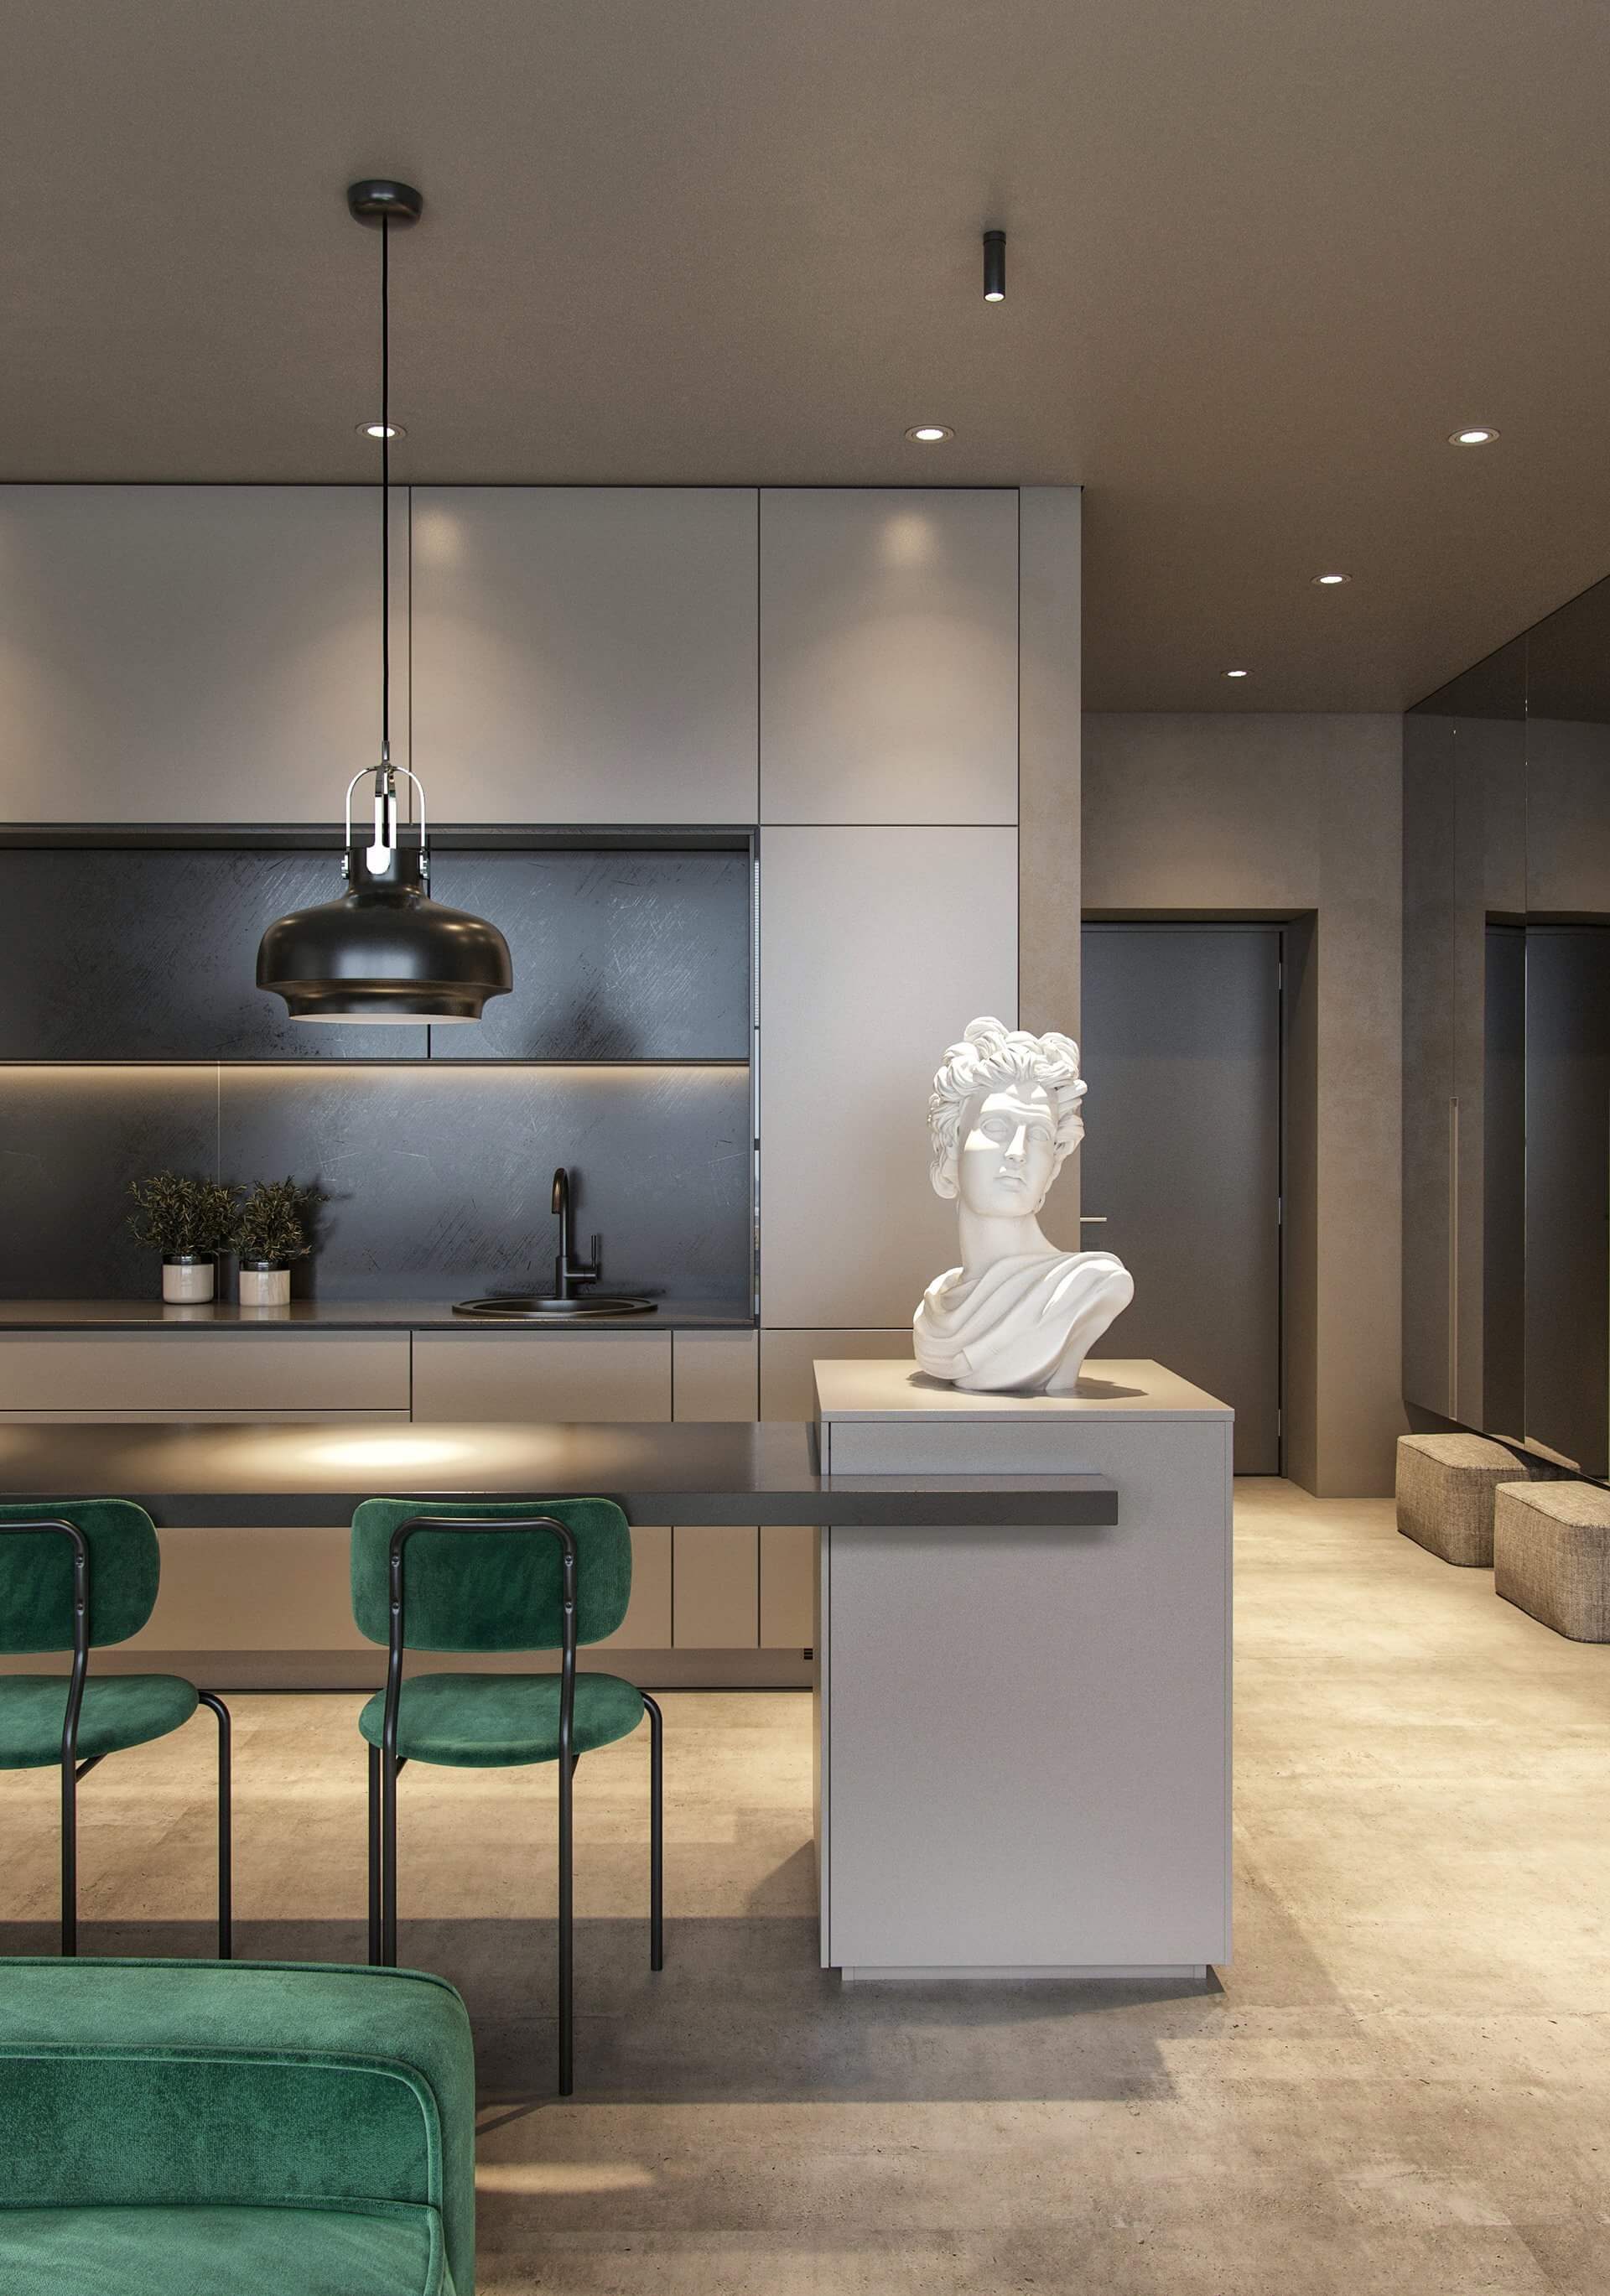 Jungle paradise apartment kitchen design block green stools - cgi visualization